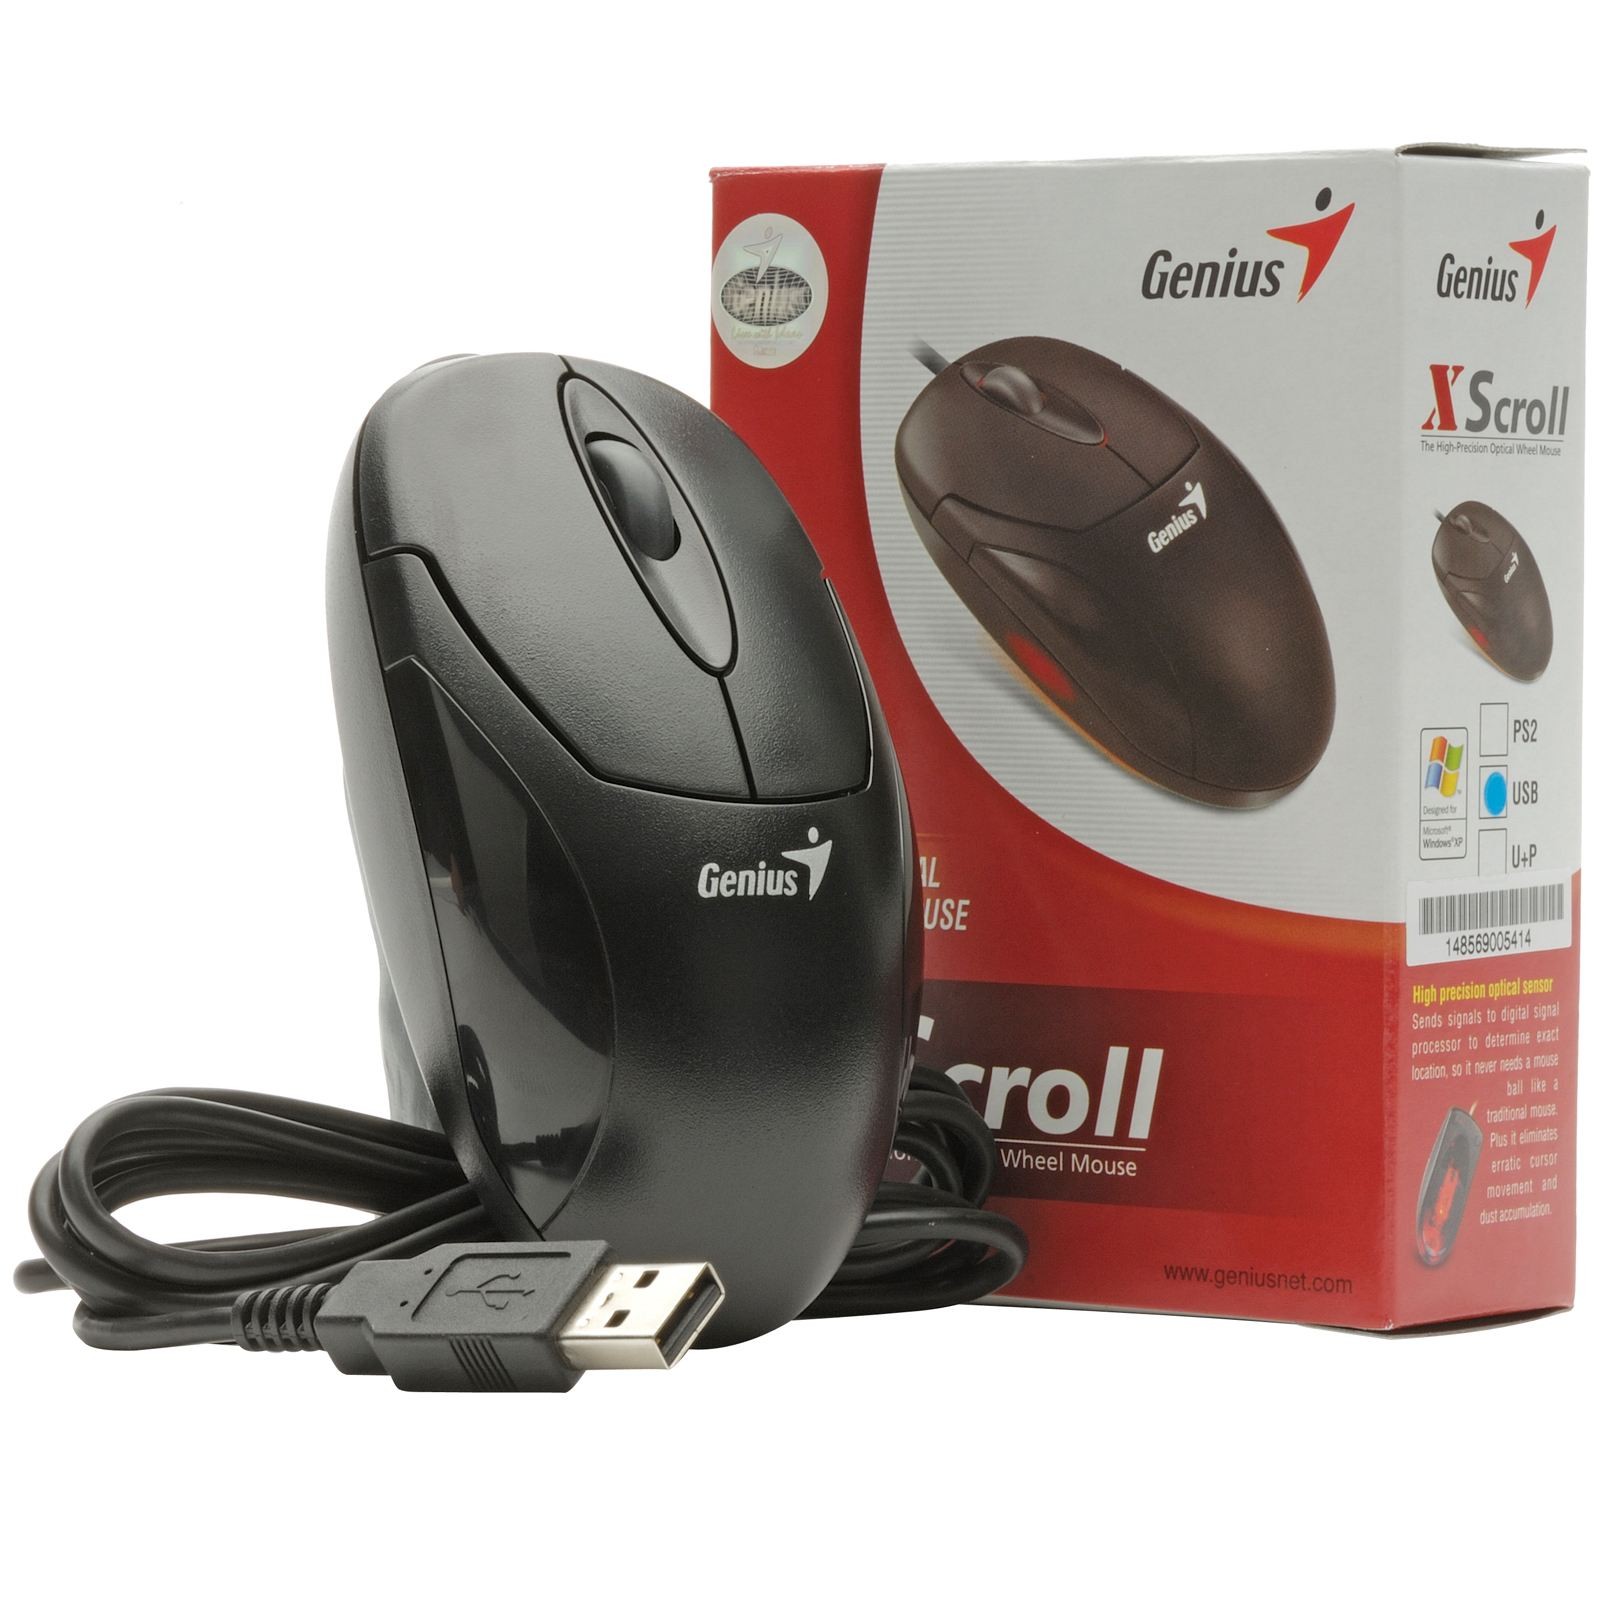 Мышь Genius Xscroll V3 G5, USB